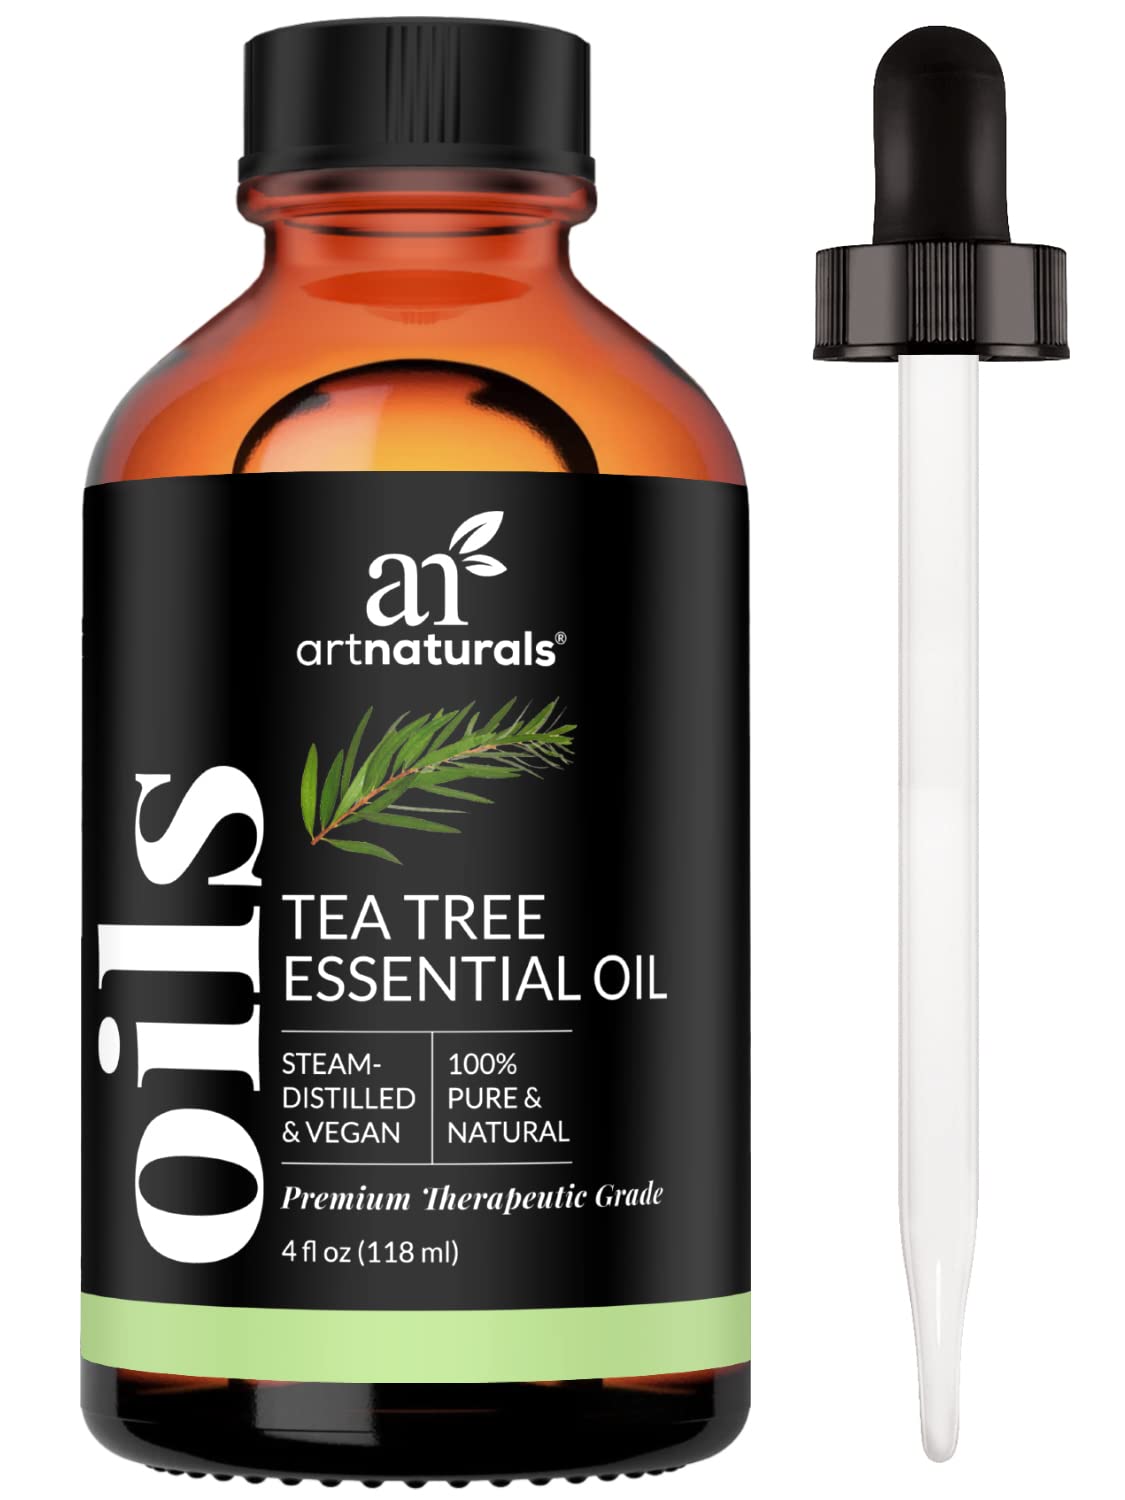 artnaturals Tea Tree Essential Oil 4oz - 100% Pure Oils Premium Melaleuca Therapeutic Grade Best for Acne, Skin, Hair, Nails, Face and Body Wash Aromatherapy & Diffuser